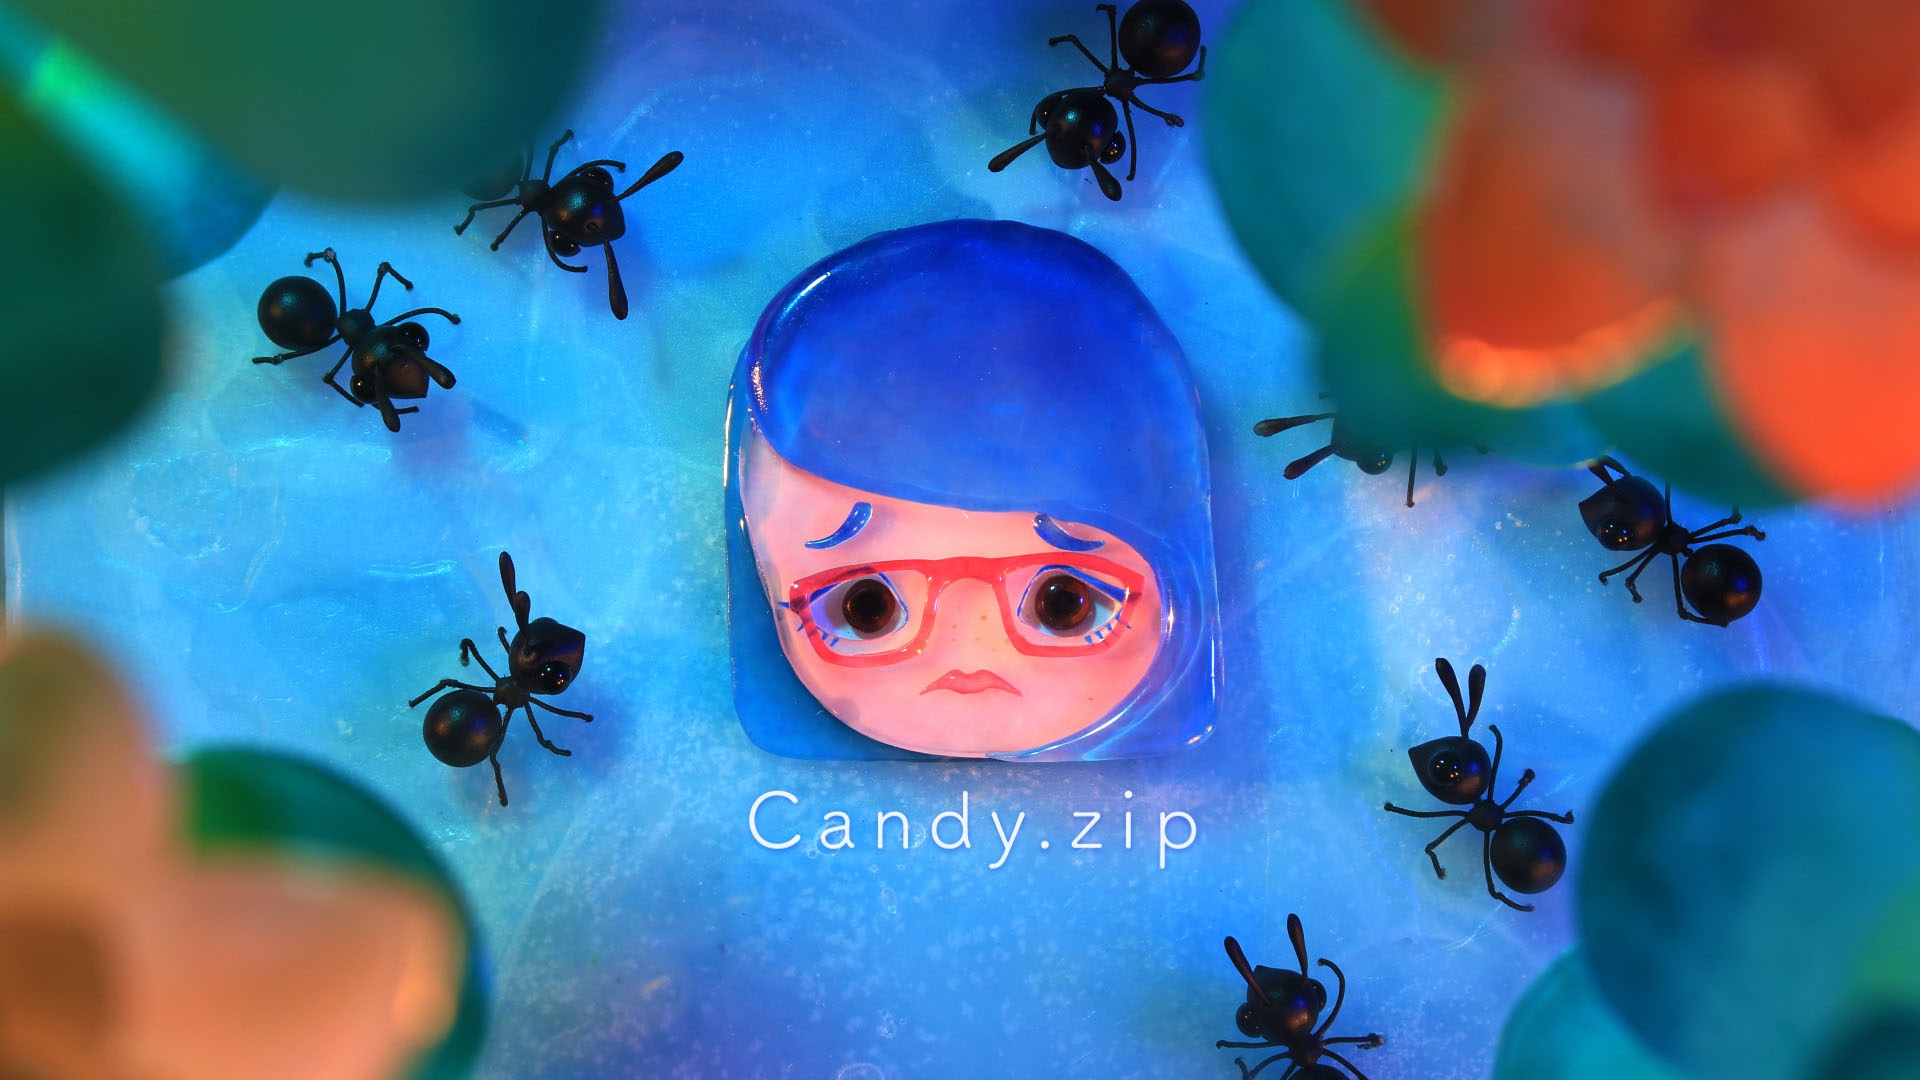 Candy.zip / 見里 朝希